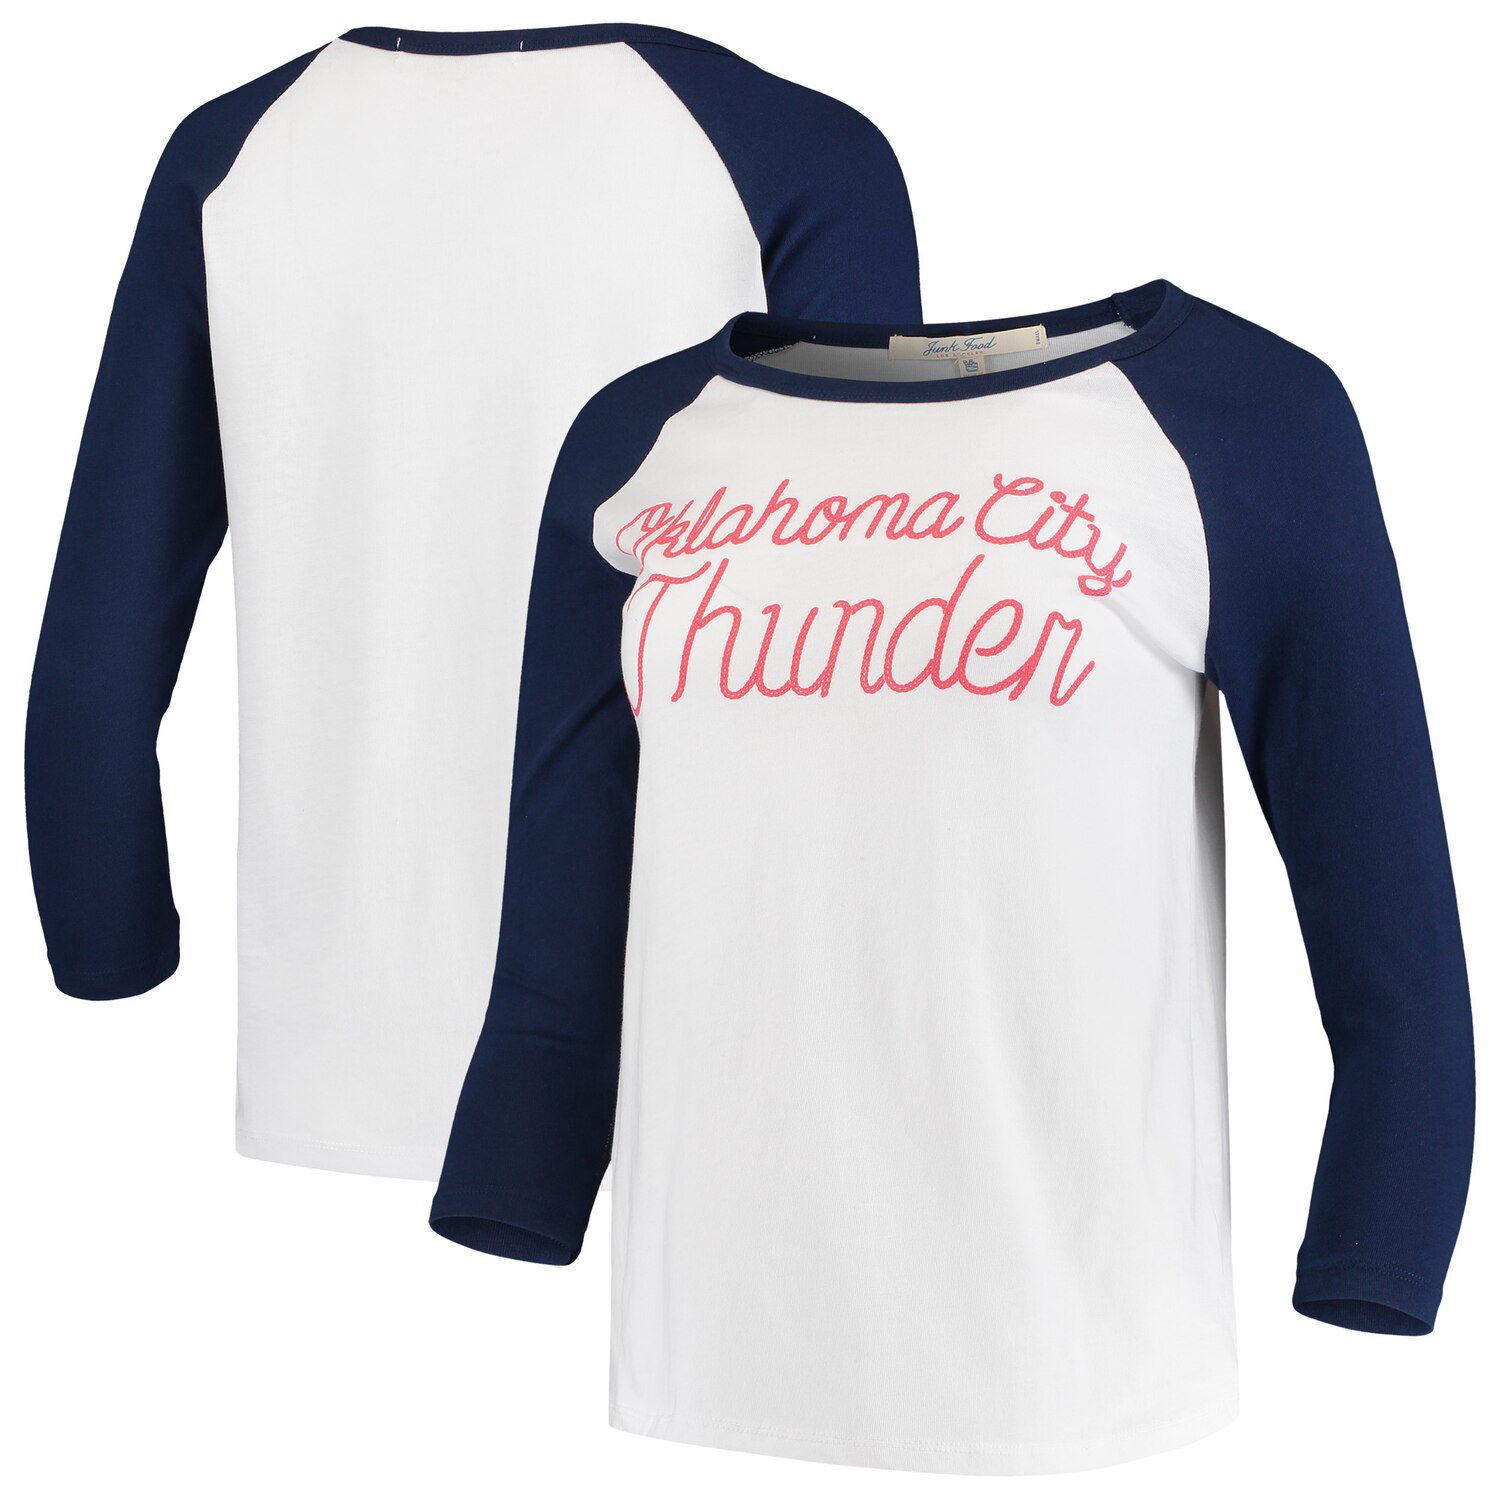 Thunder women's jersey